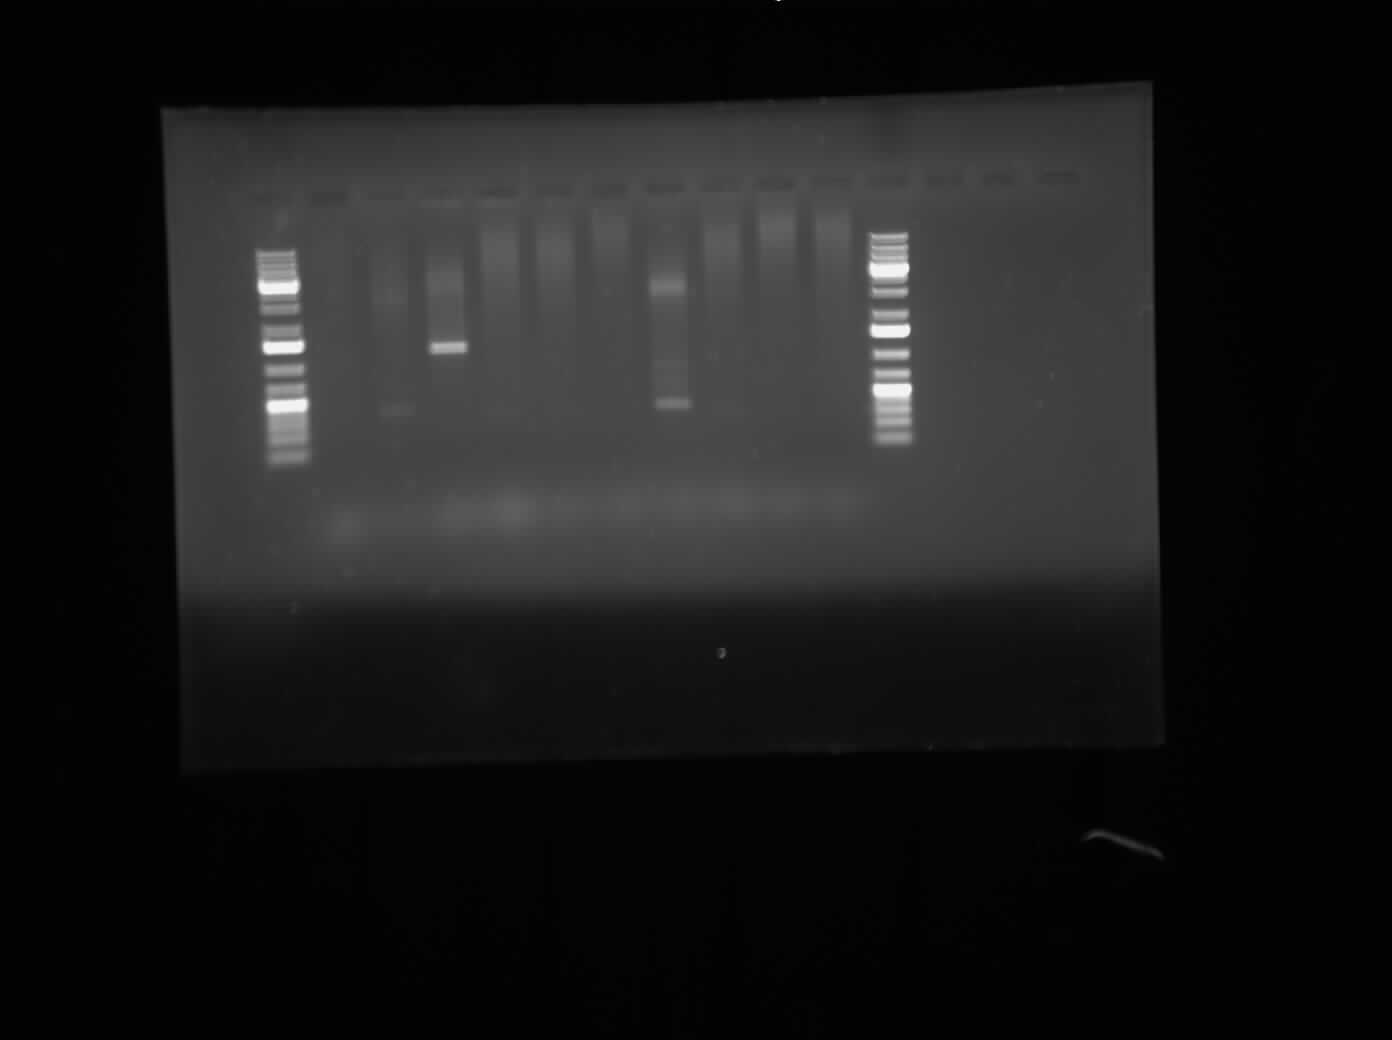 07.26.2010-CpxP PCR results.jpg